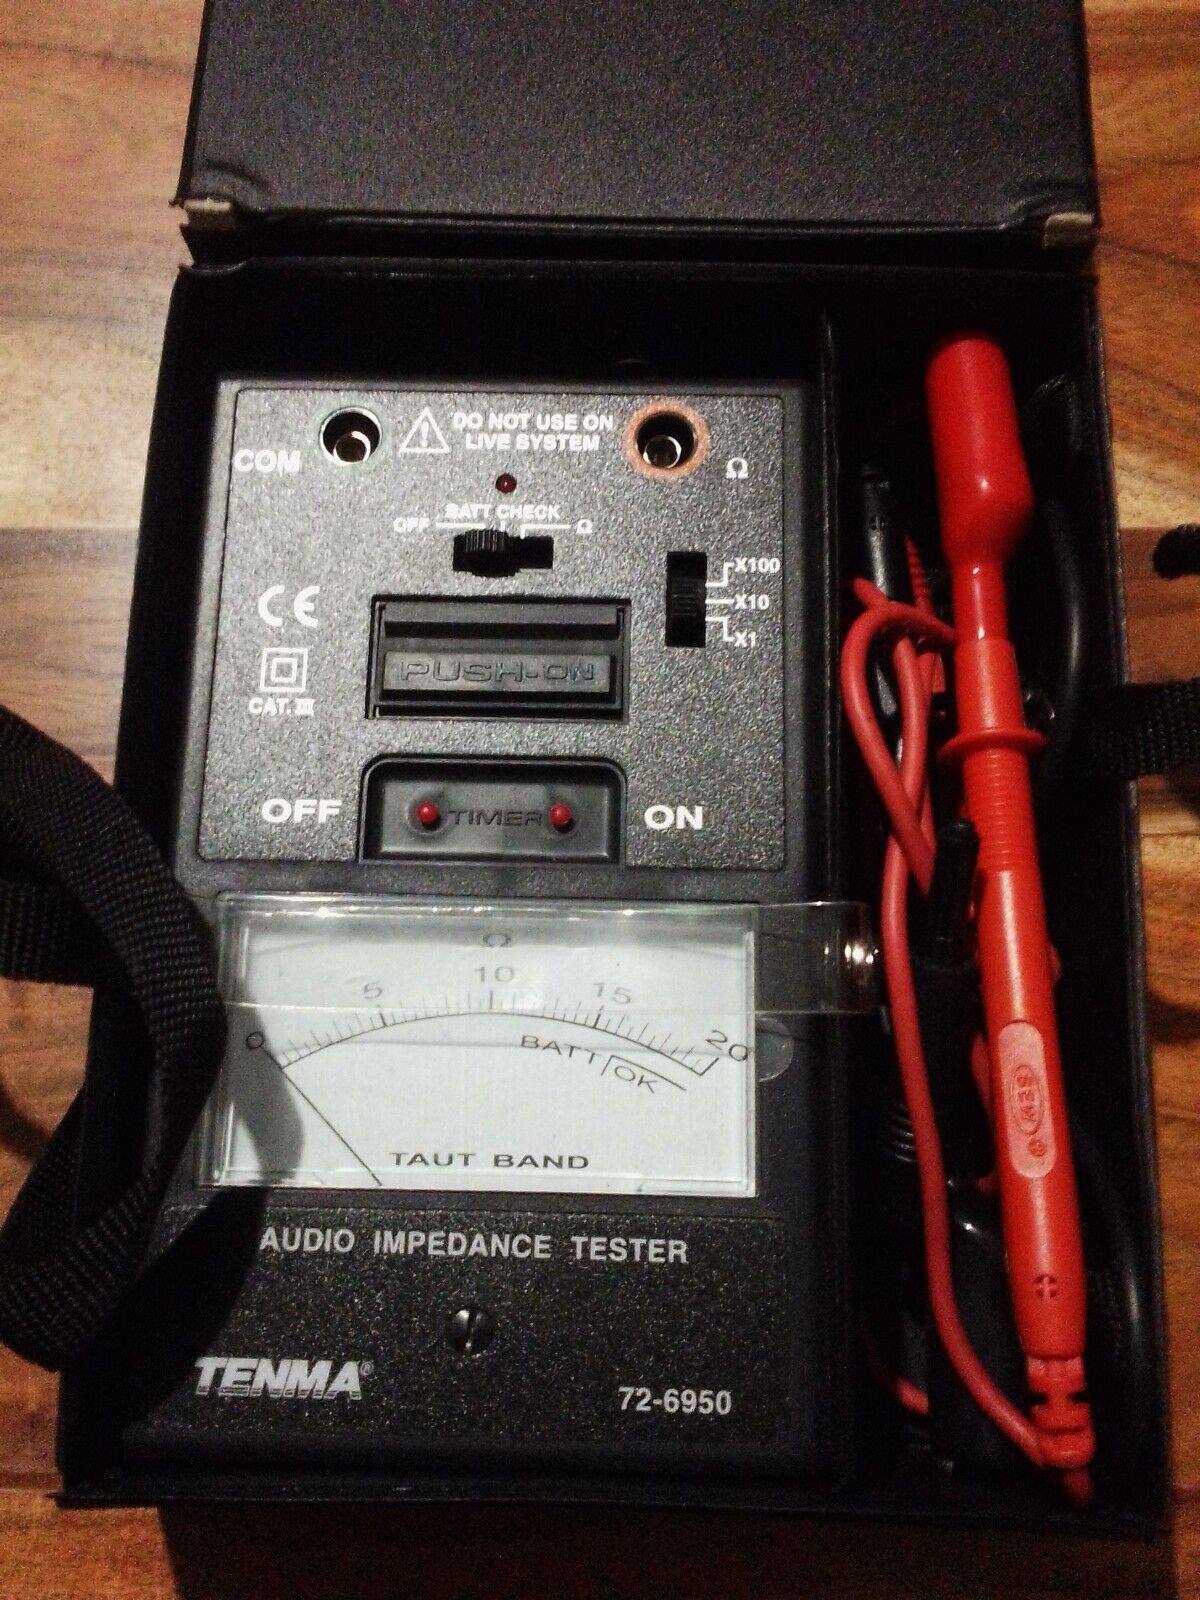 Tenma 72-6960 Audio Impedance Tester